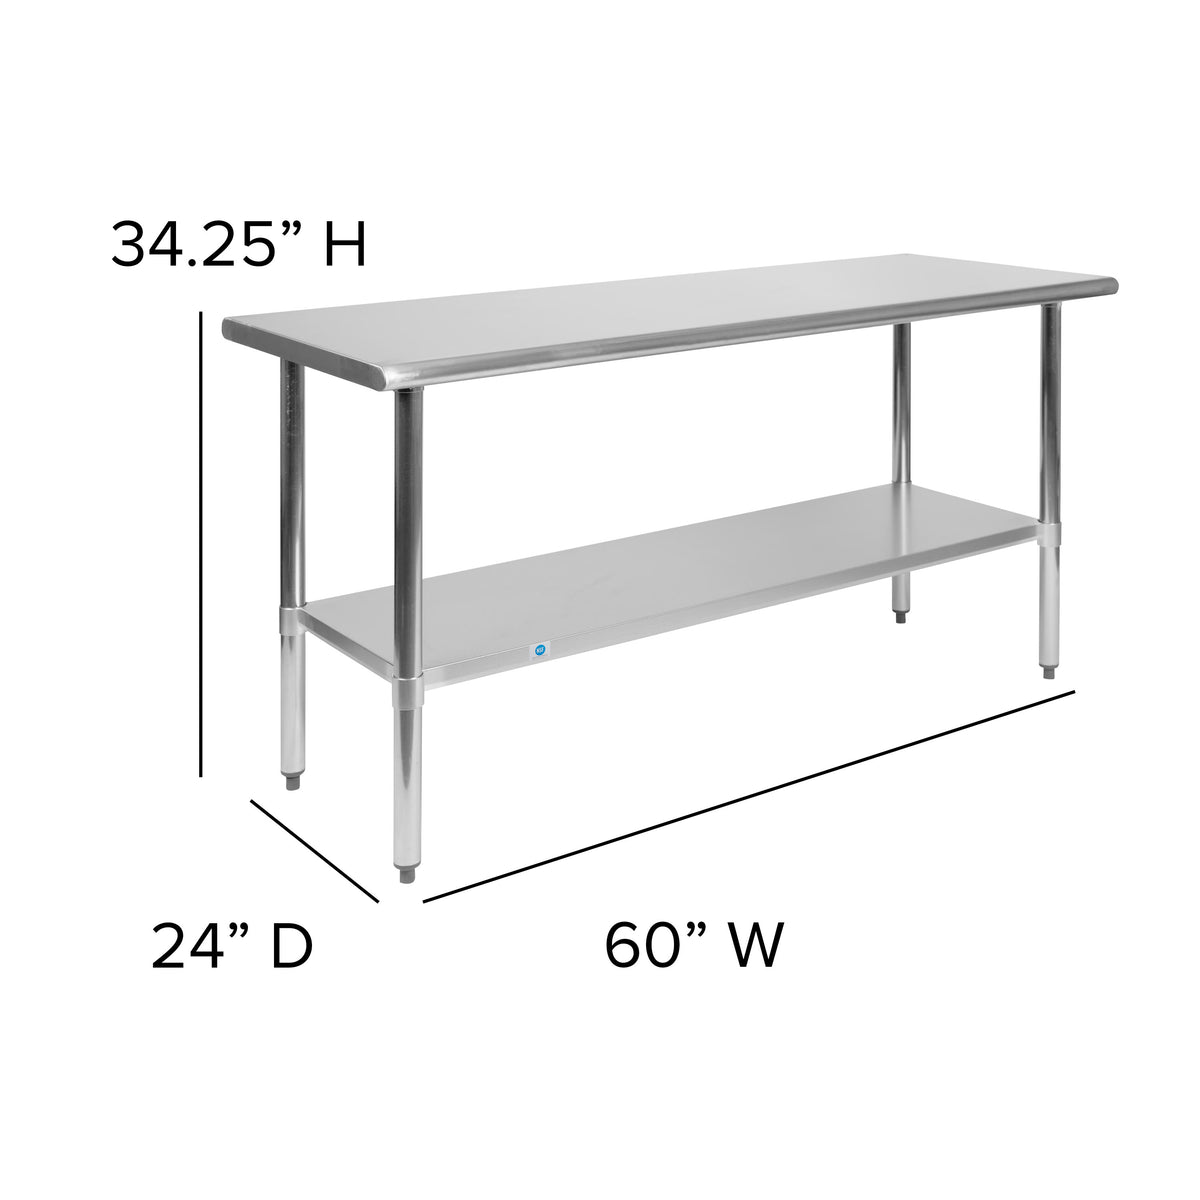 60"W x 24"D |#| Stainless Steel 18 Gauge Work Table with Undershelf, NSF - 60"W x 24"D x 34.5"H